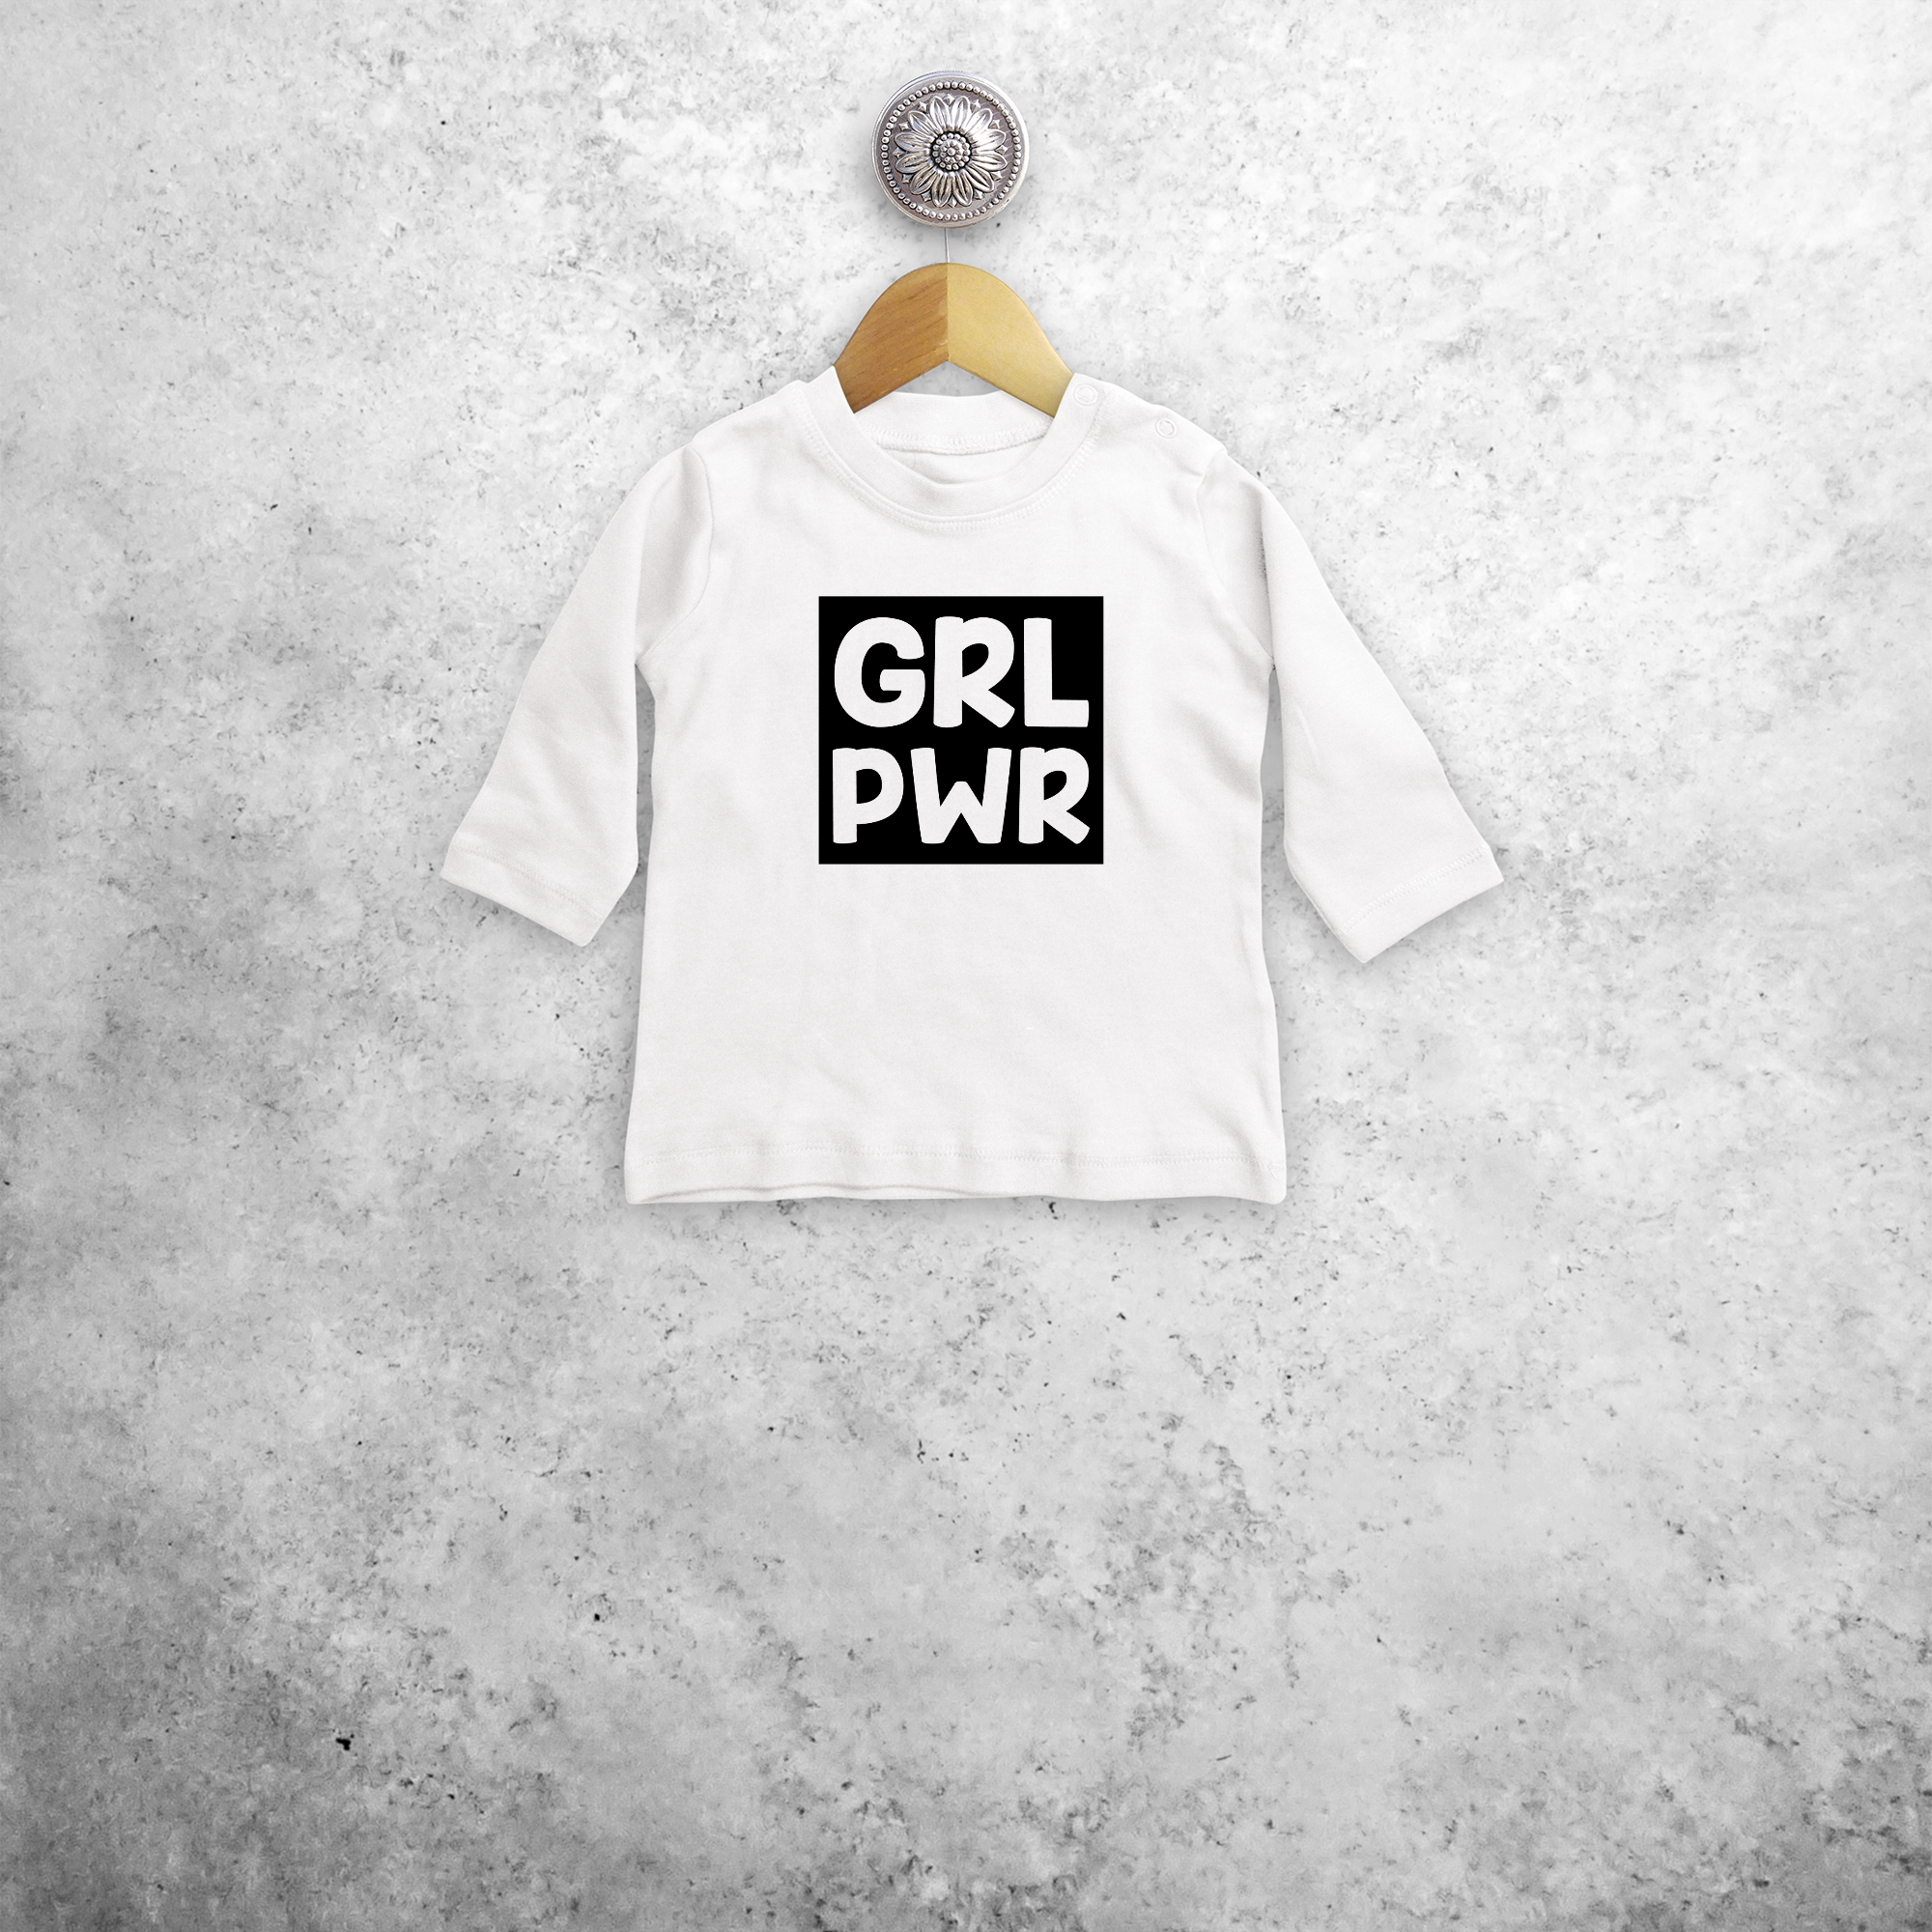 'GRL PWR' baby longsleeve shirt